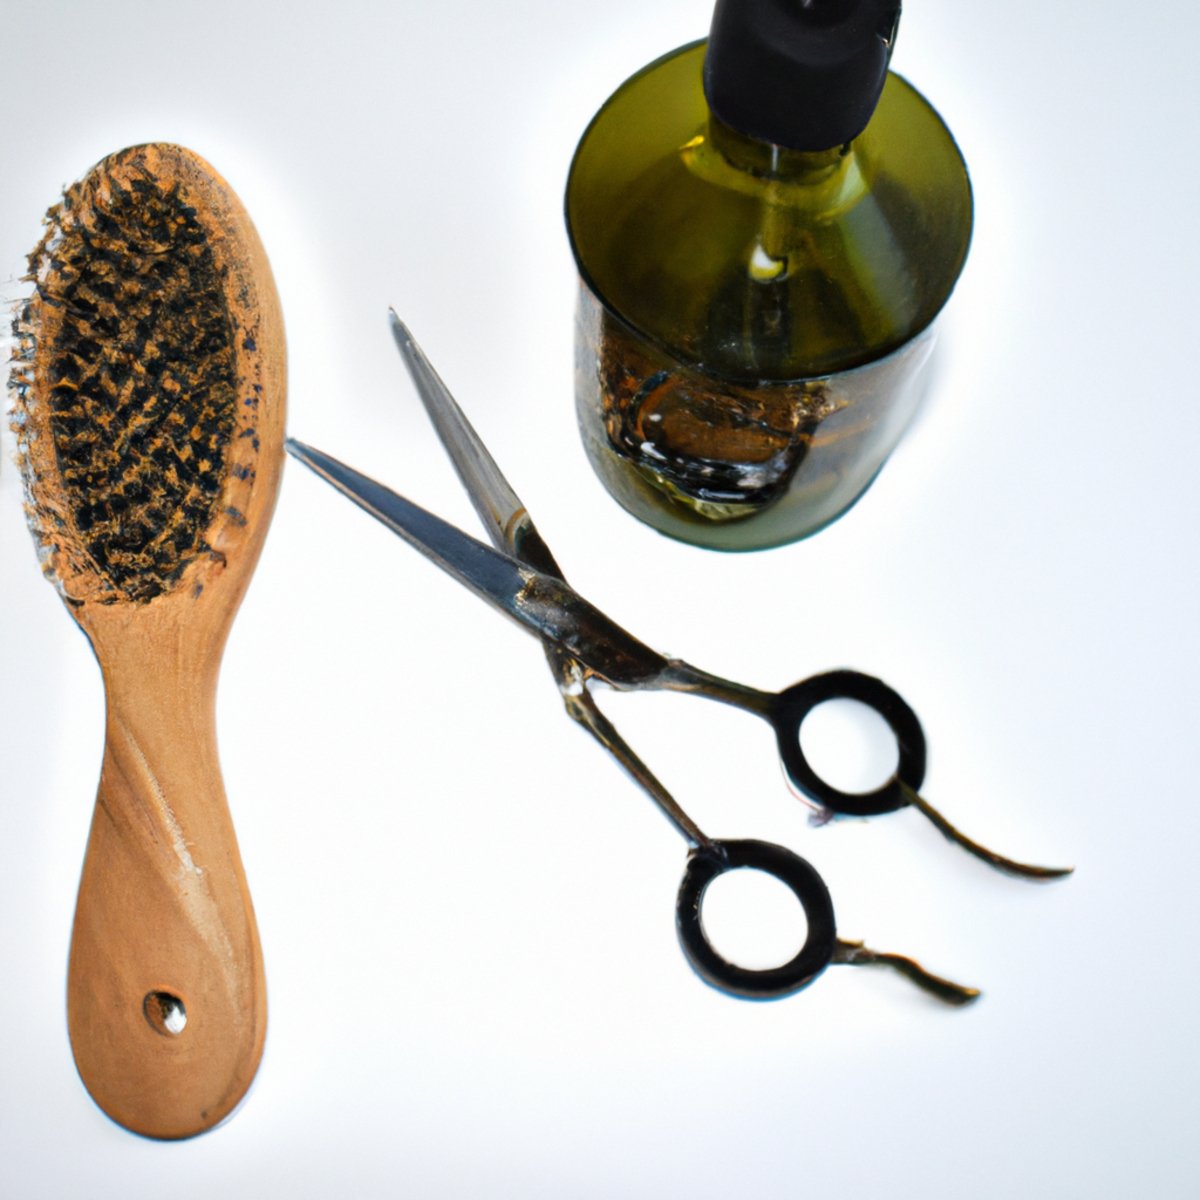 Hair care essentials: boar hair brush, argan oil, and scissors.